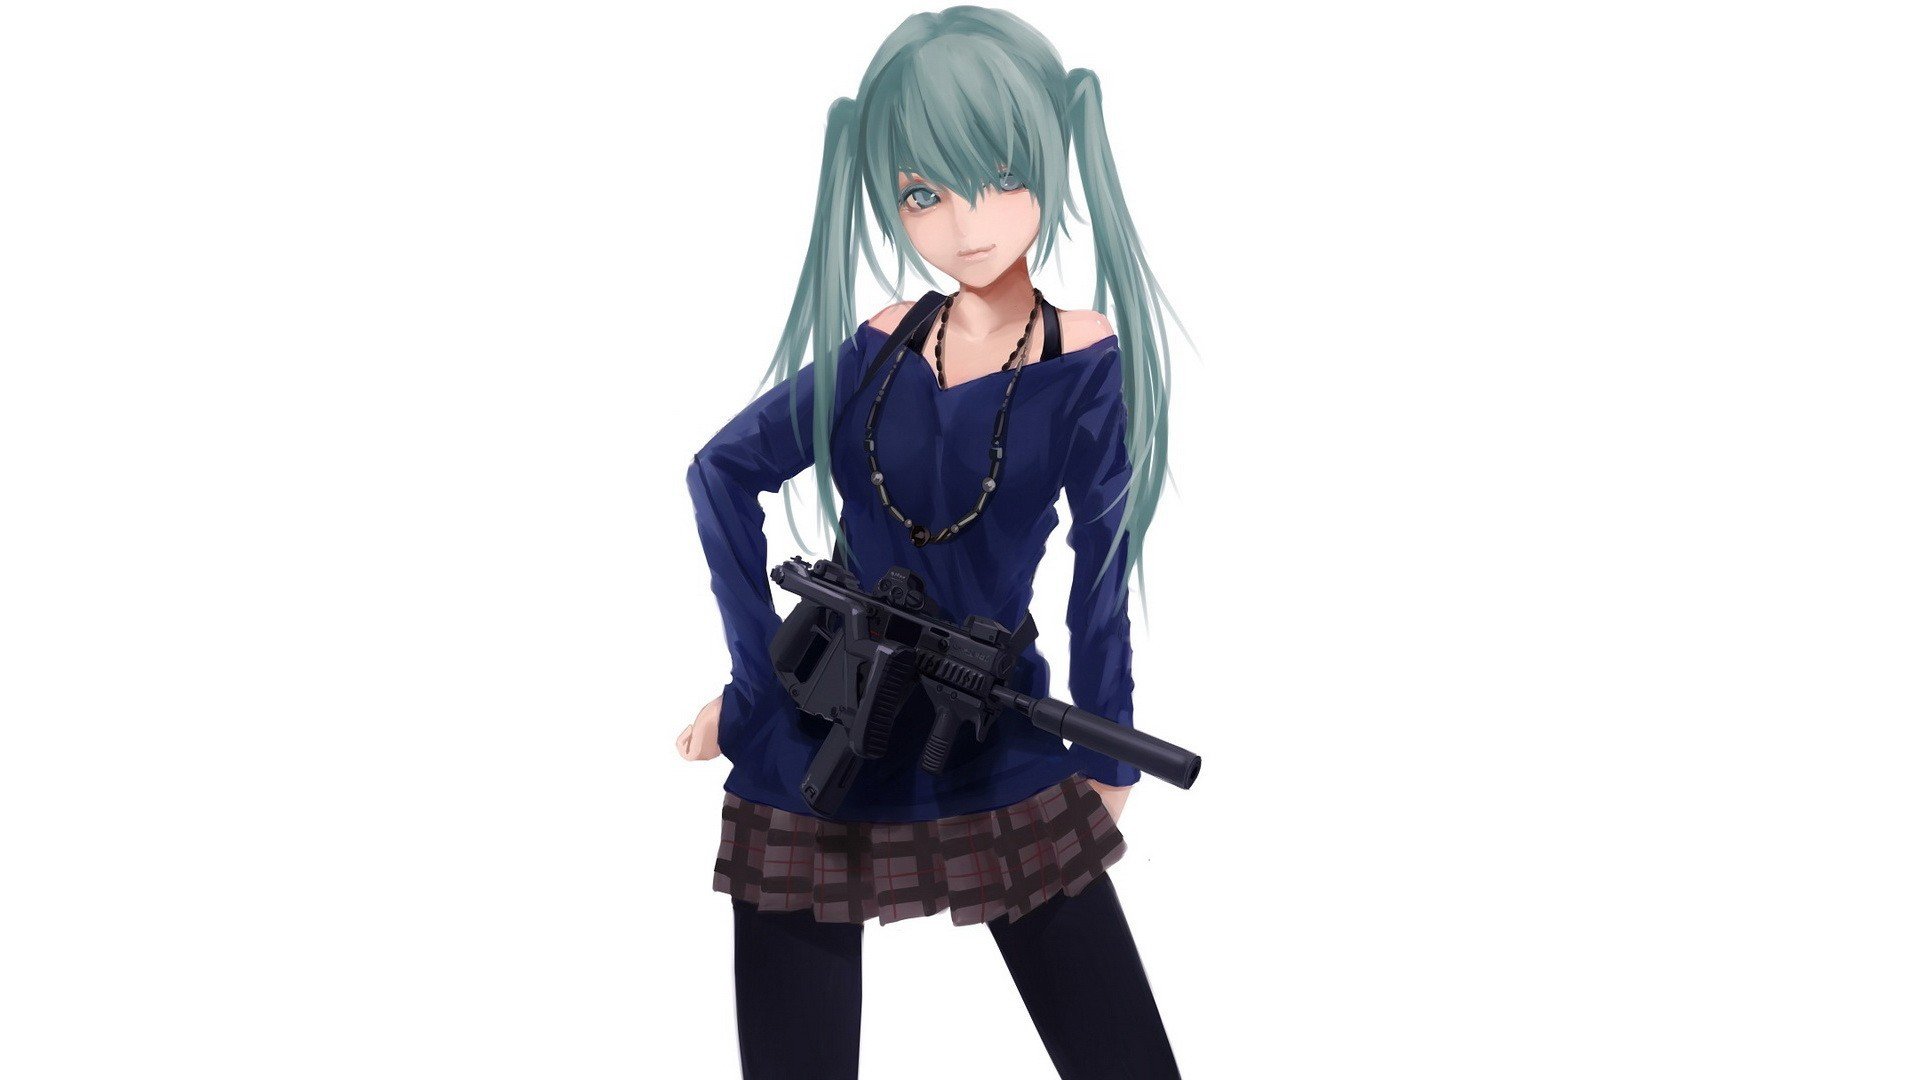 Anime Anime Girls Gun Vocaloid Hatsune Miku Kriss Vector Hd Wallpapers Desktop And Mobile Images Photos